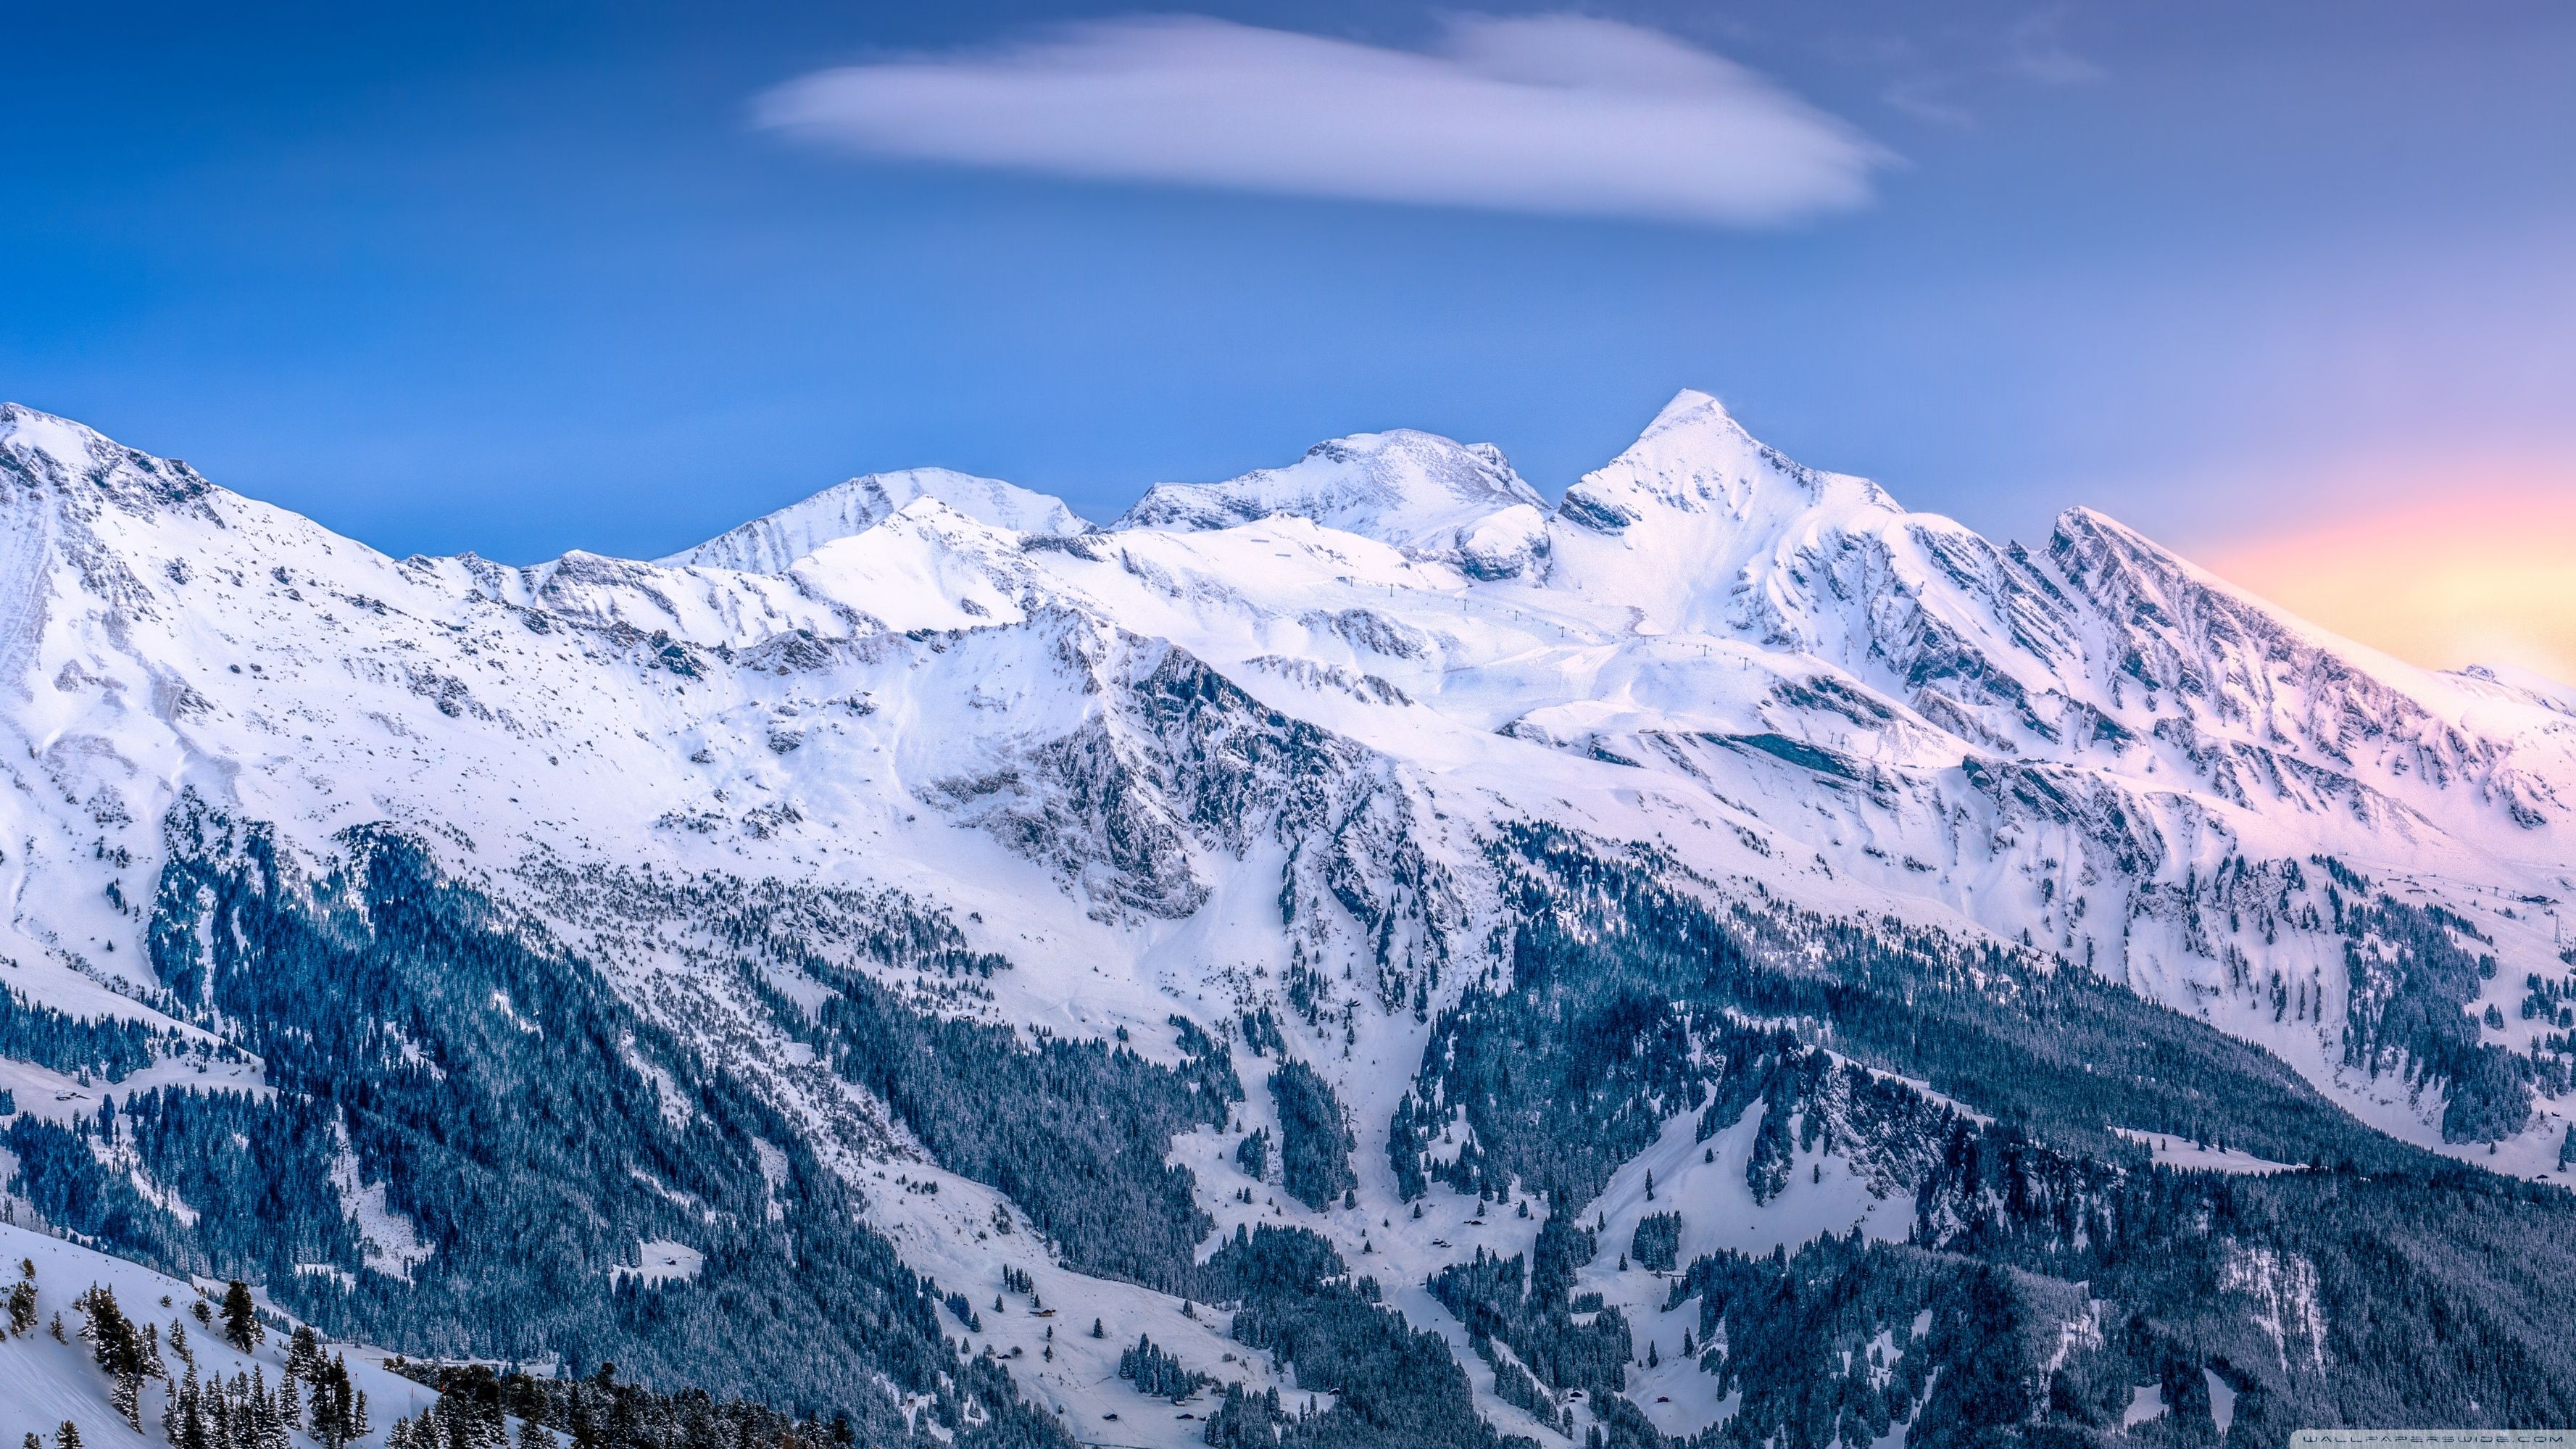 Mountain, Ski Slope Ultra HD Desktop .wallpaperwide.com